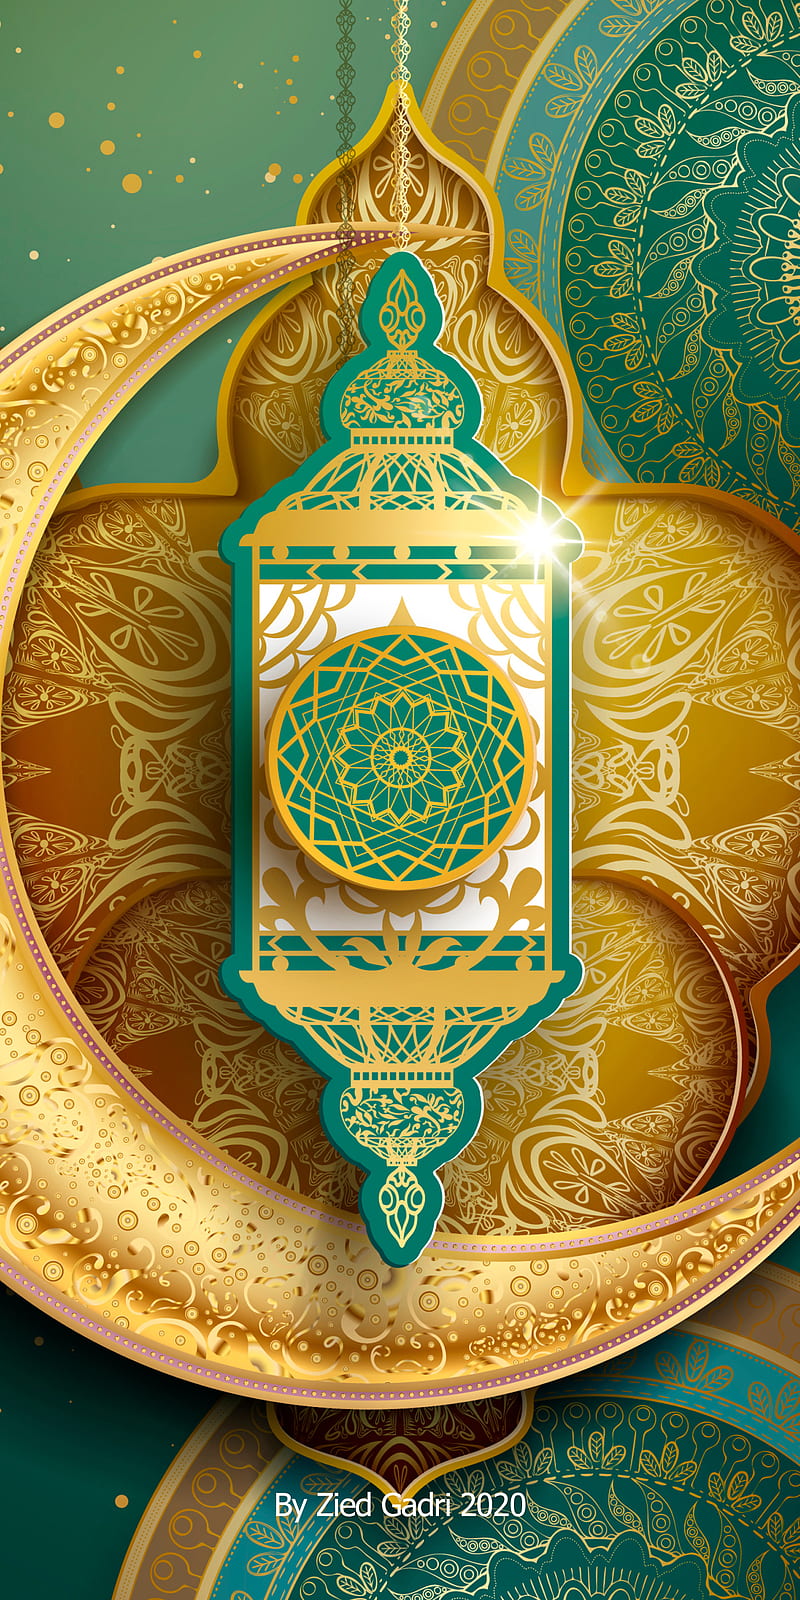 Astaghfirullah, islam, ramadan, saying, HD phone wallpaper | Peakpx